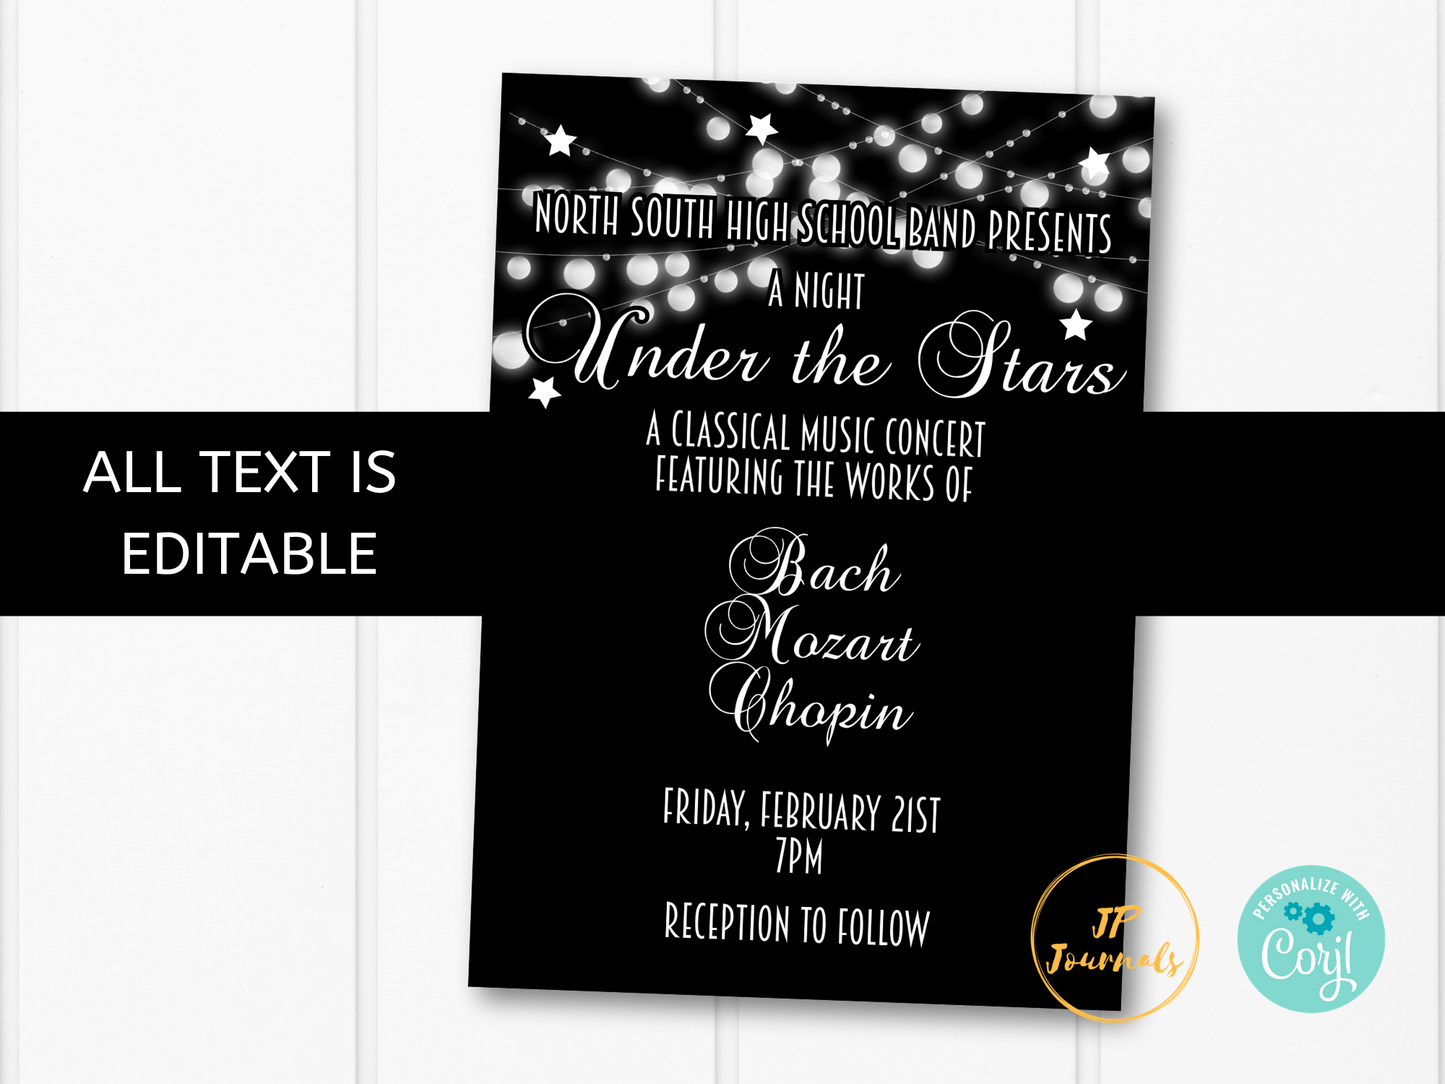 Under the Stars Band Recital Concert Invitation Template - Printable Invite - High School Band Concert, City Concert, Choir Concert, Recital